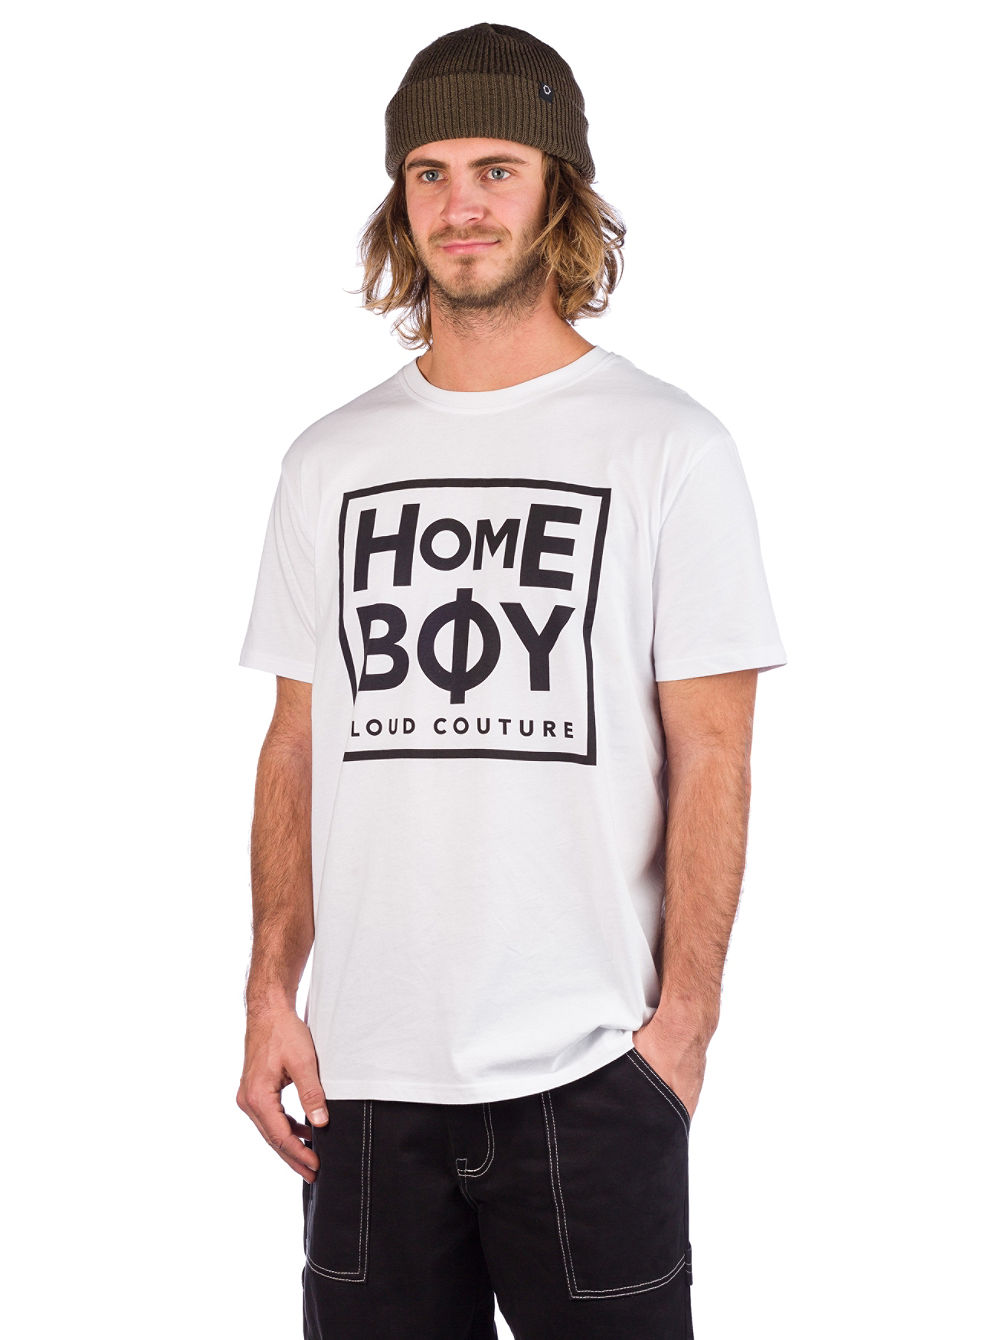 Take You Home T-Shirt